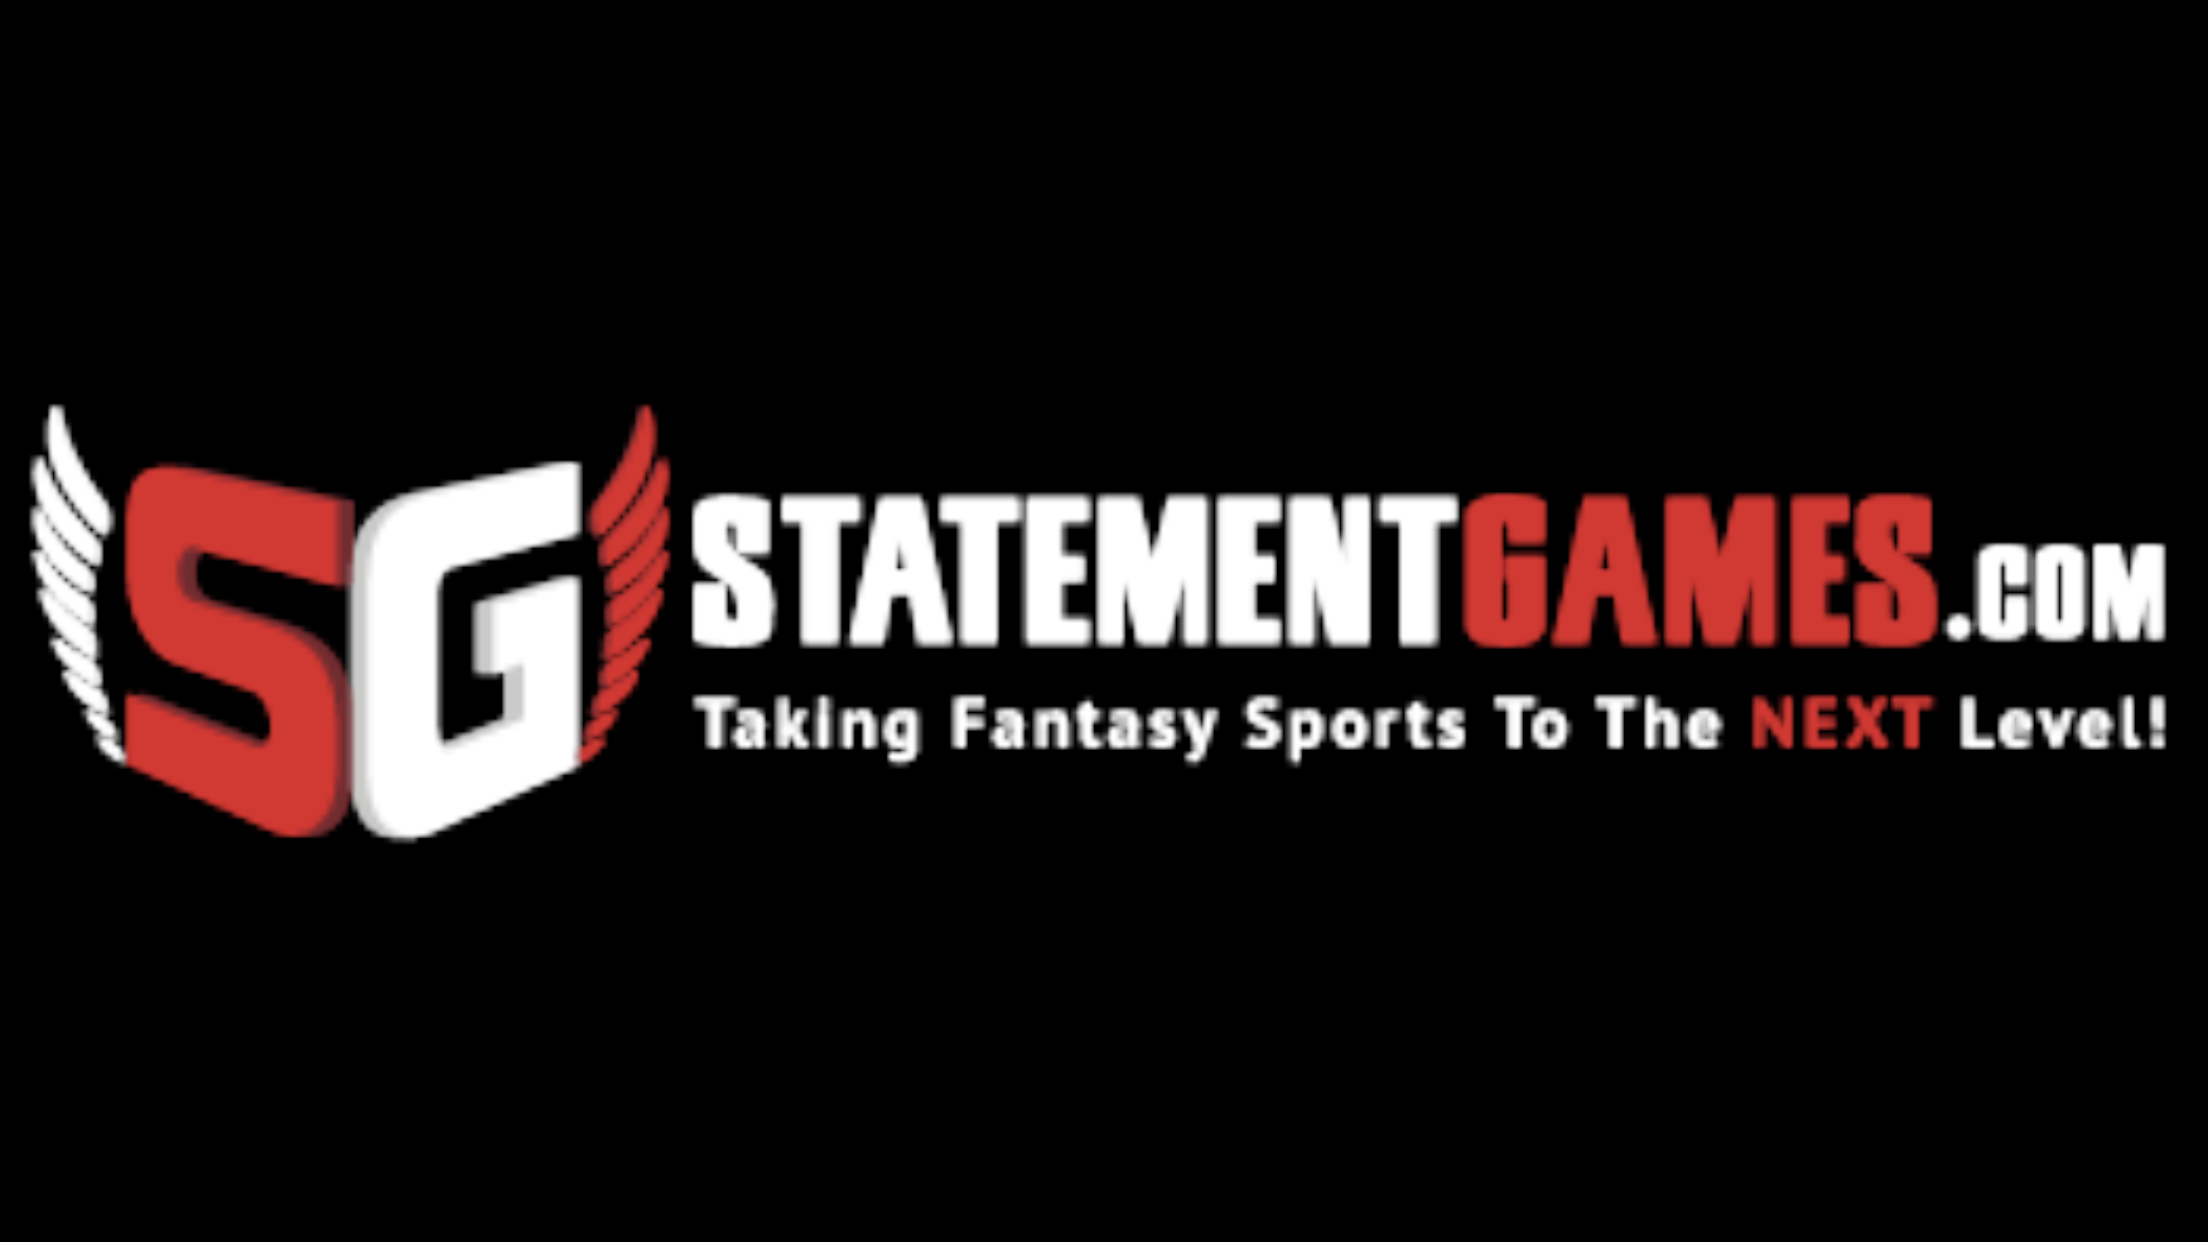 StatementGames Fantasy Sports